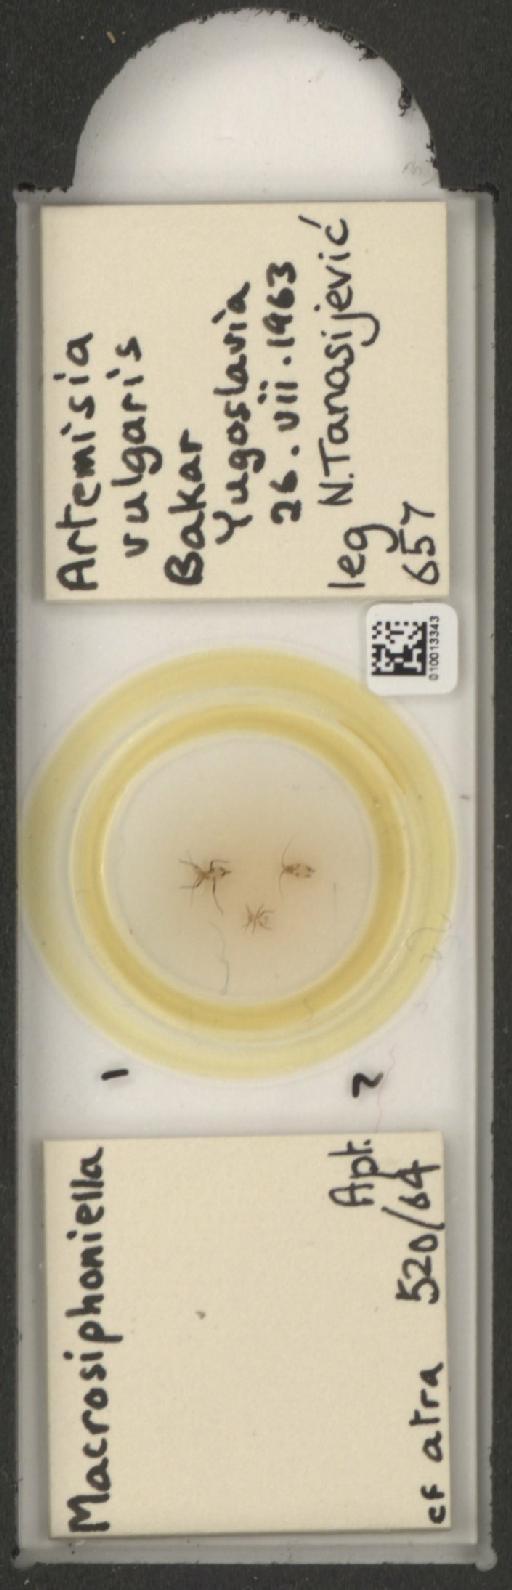 Macrosiphoniella artemisiae Fonscolombe, 1841 - 010013343_112659_1094715